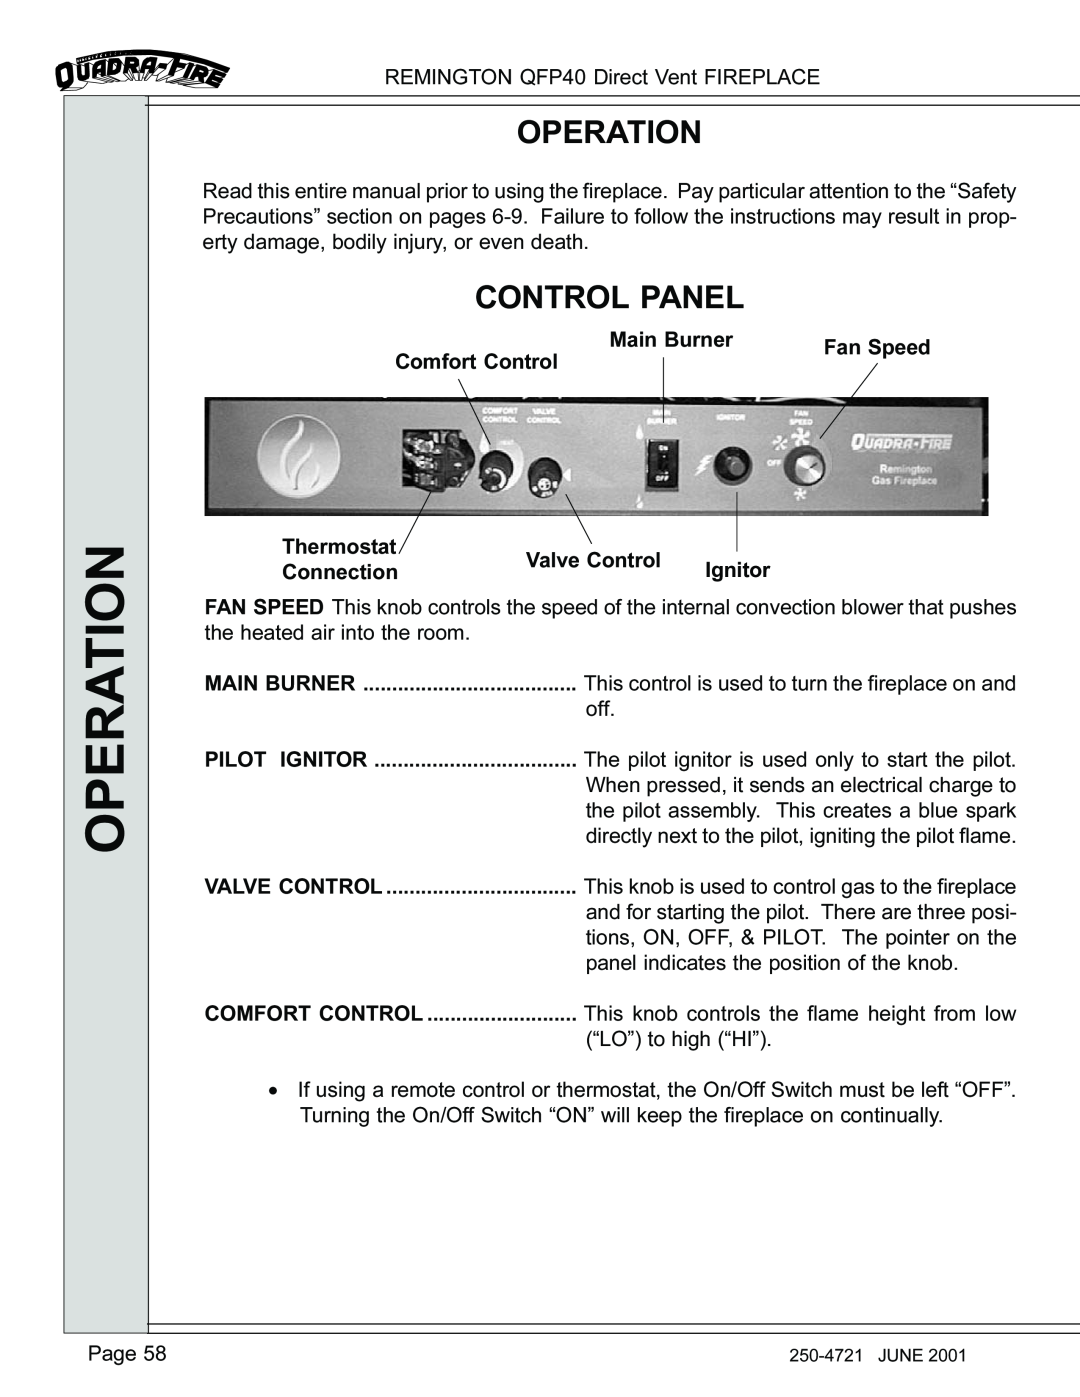 Remington QFP40 manual Operation, Control Panel 